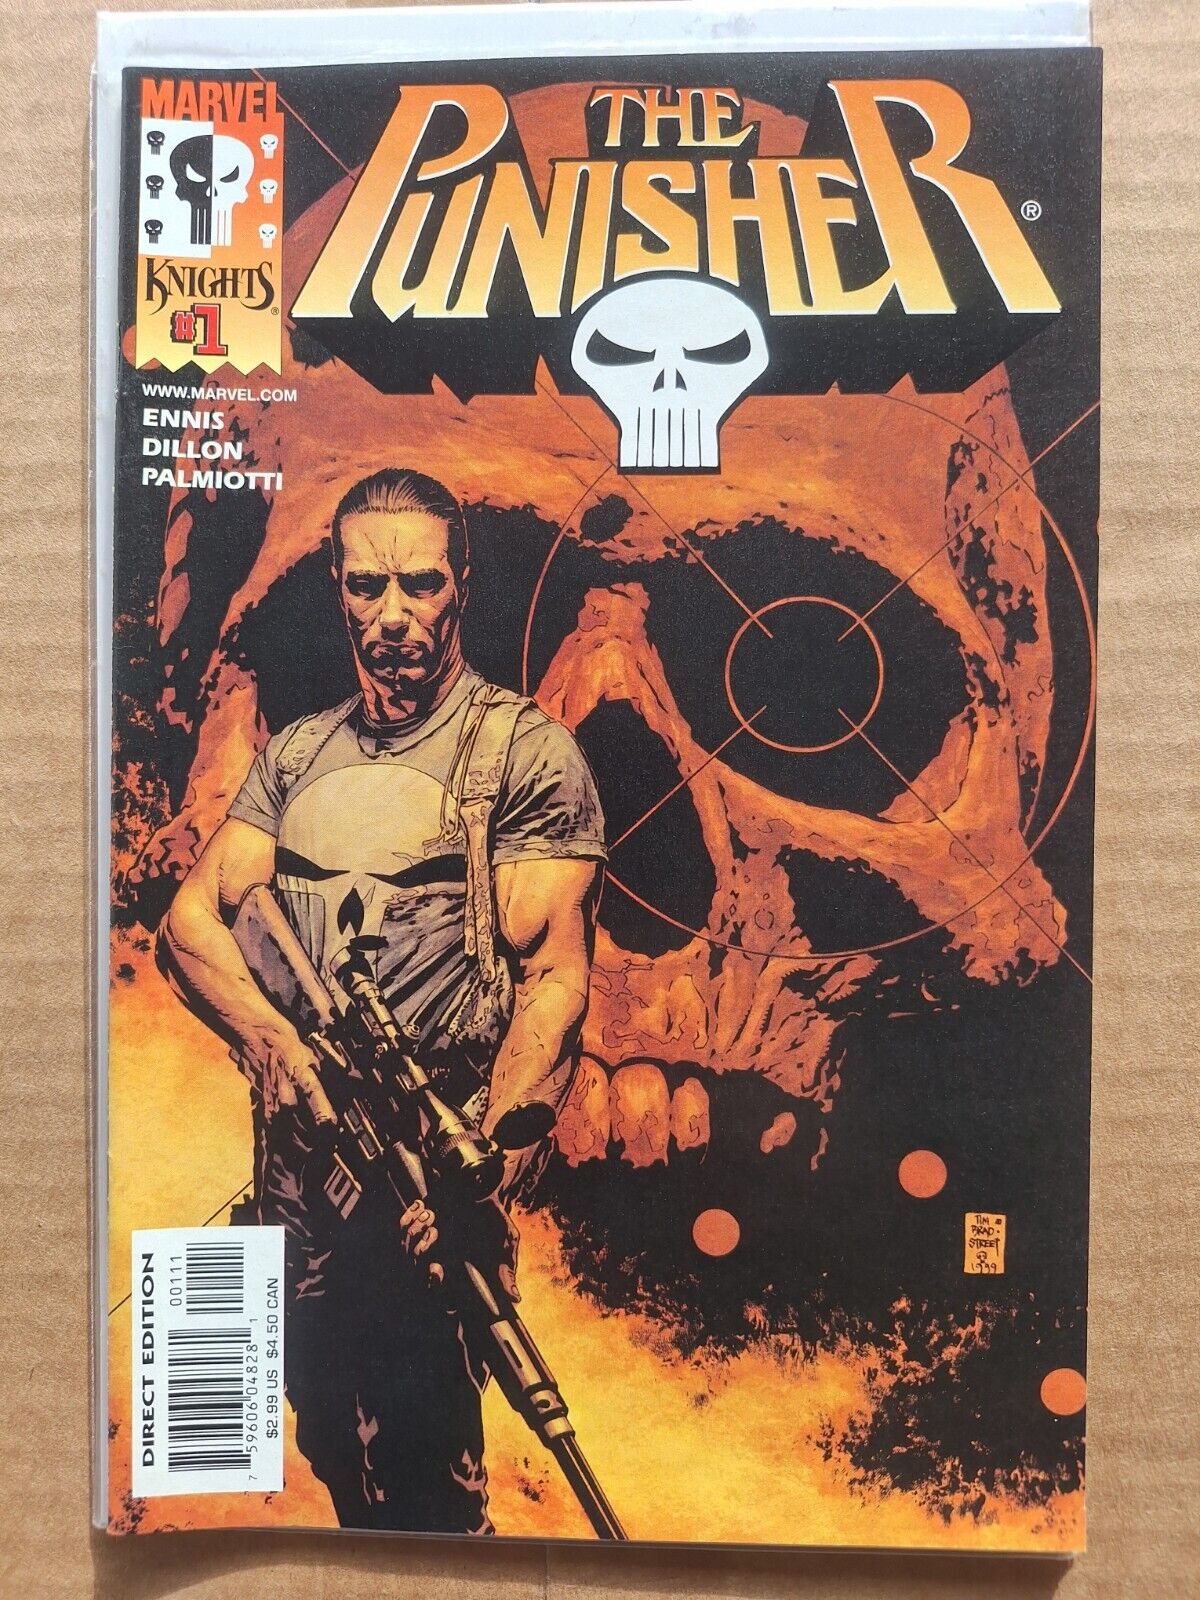 Punisher #1 (Marvel Comics April 2001)